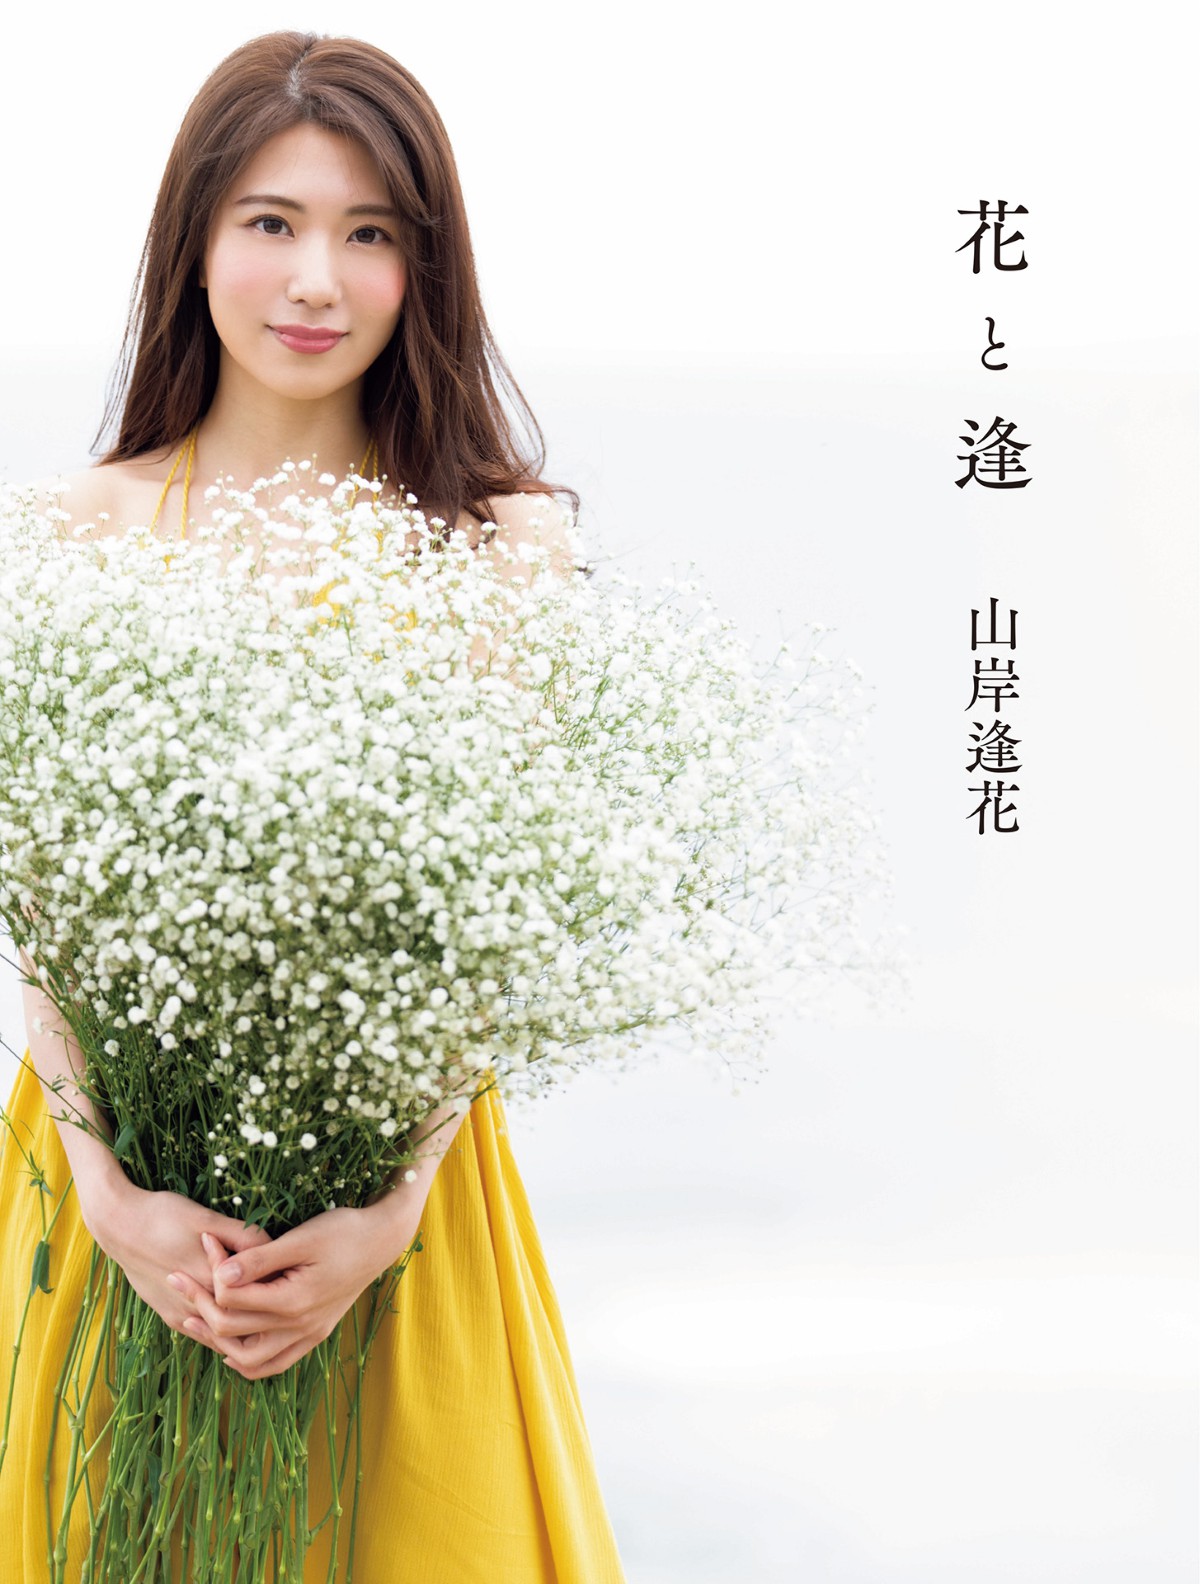 Photobook 2020 05 29 Aika Yamagishi 山岸逢花 Flower And Aika 0002 0735591038.jpg